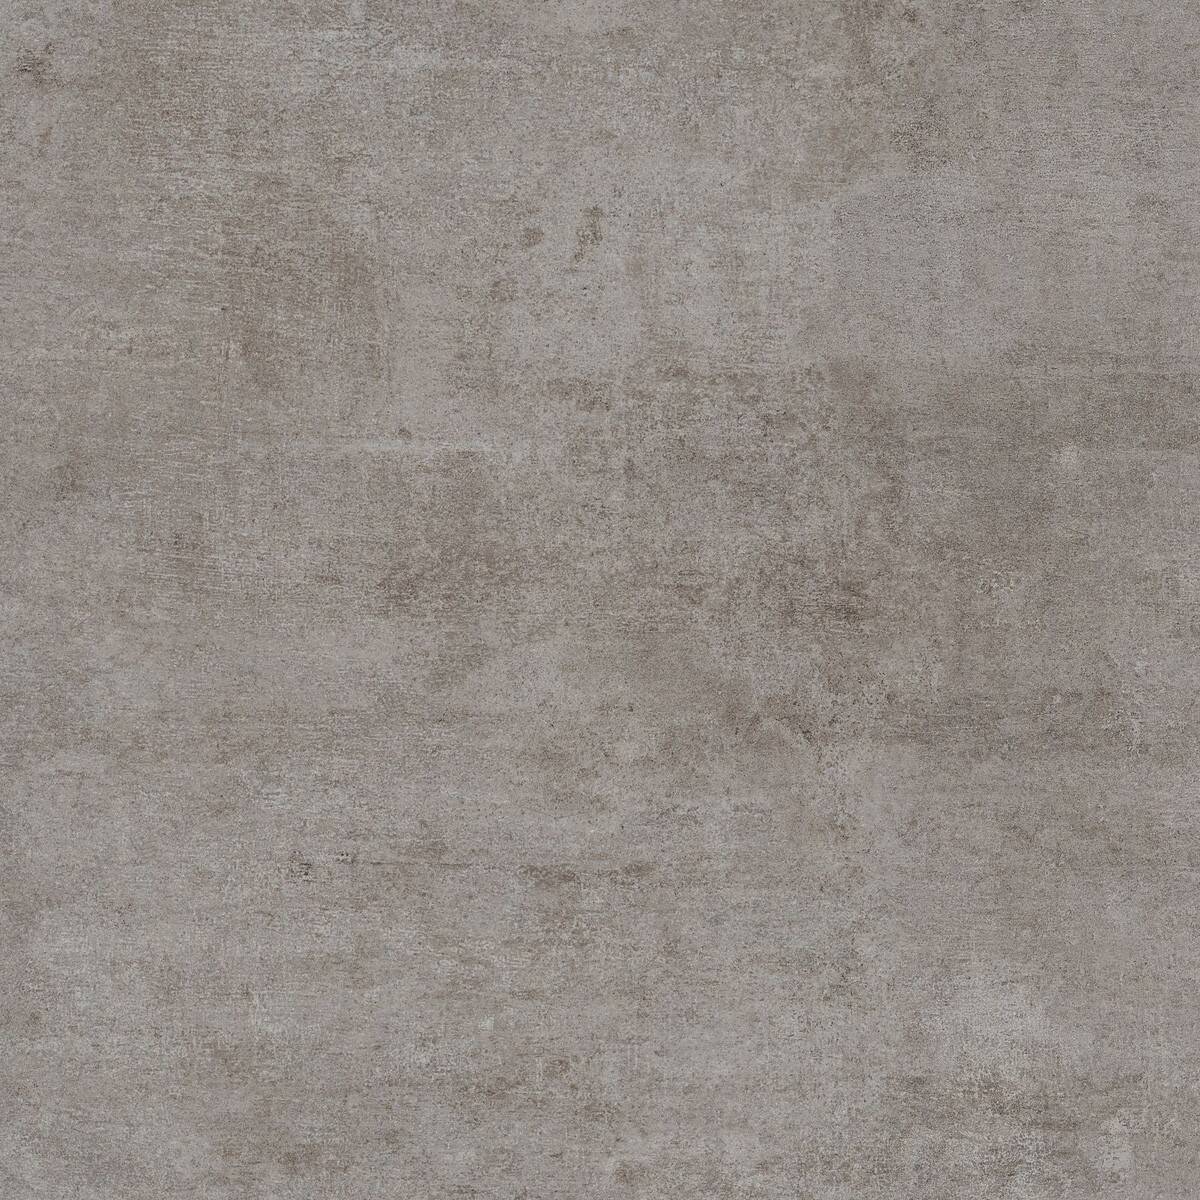 Płyta tarasowa BUFFALO light grey 340 60x60x2 cm